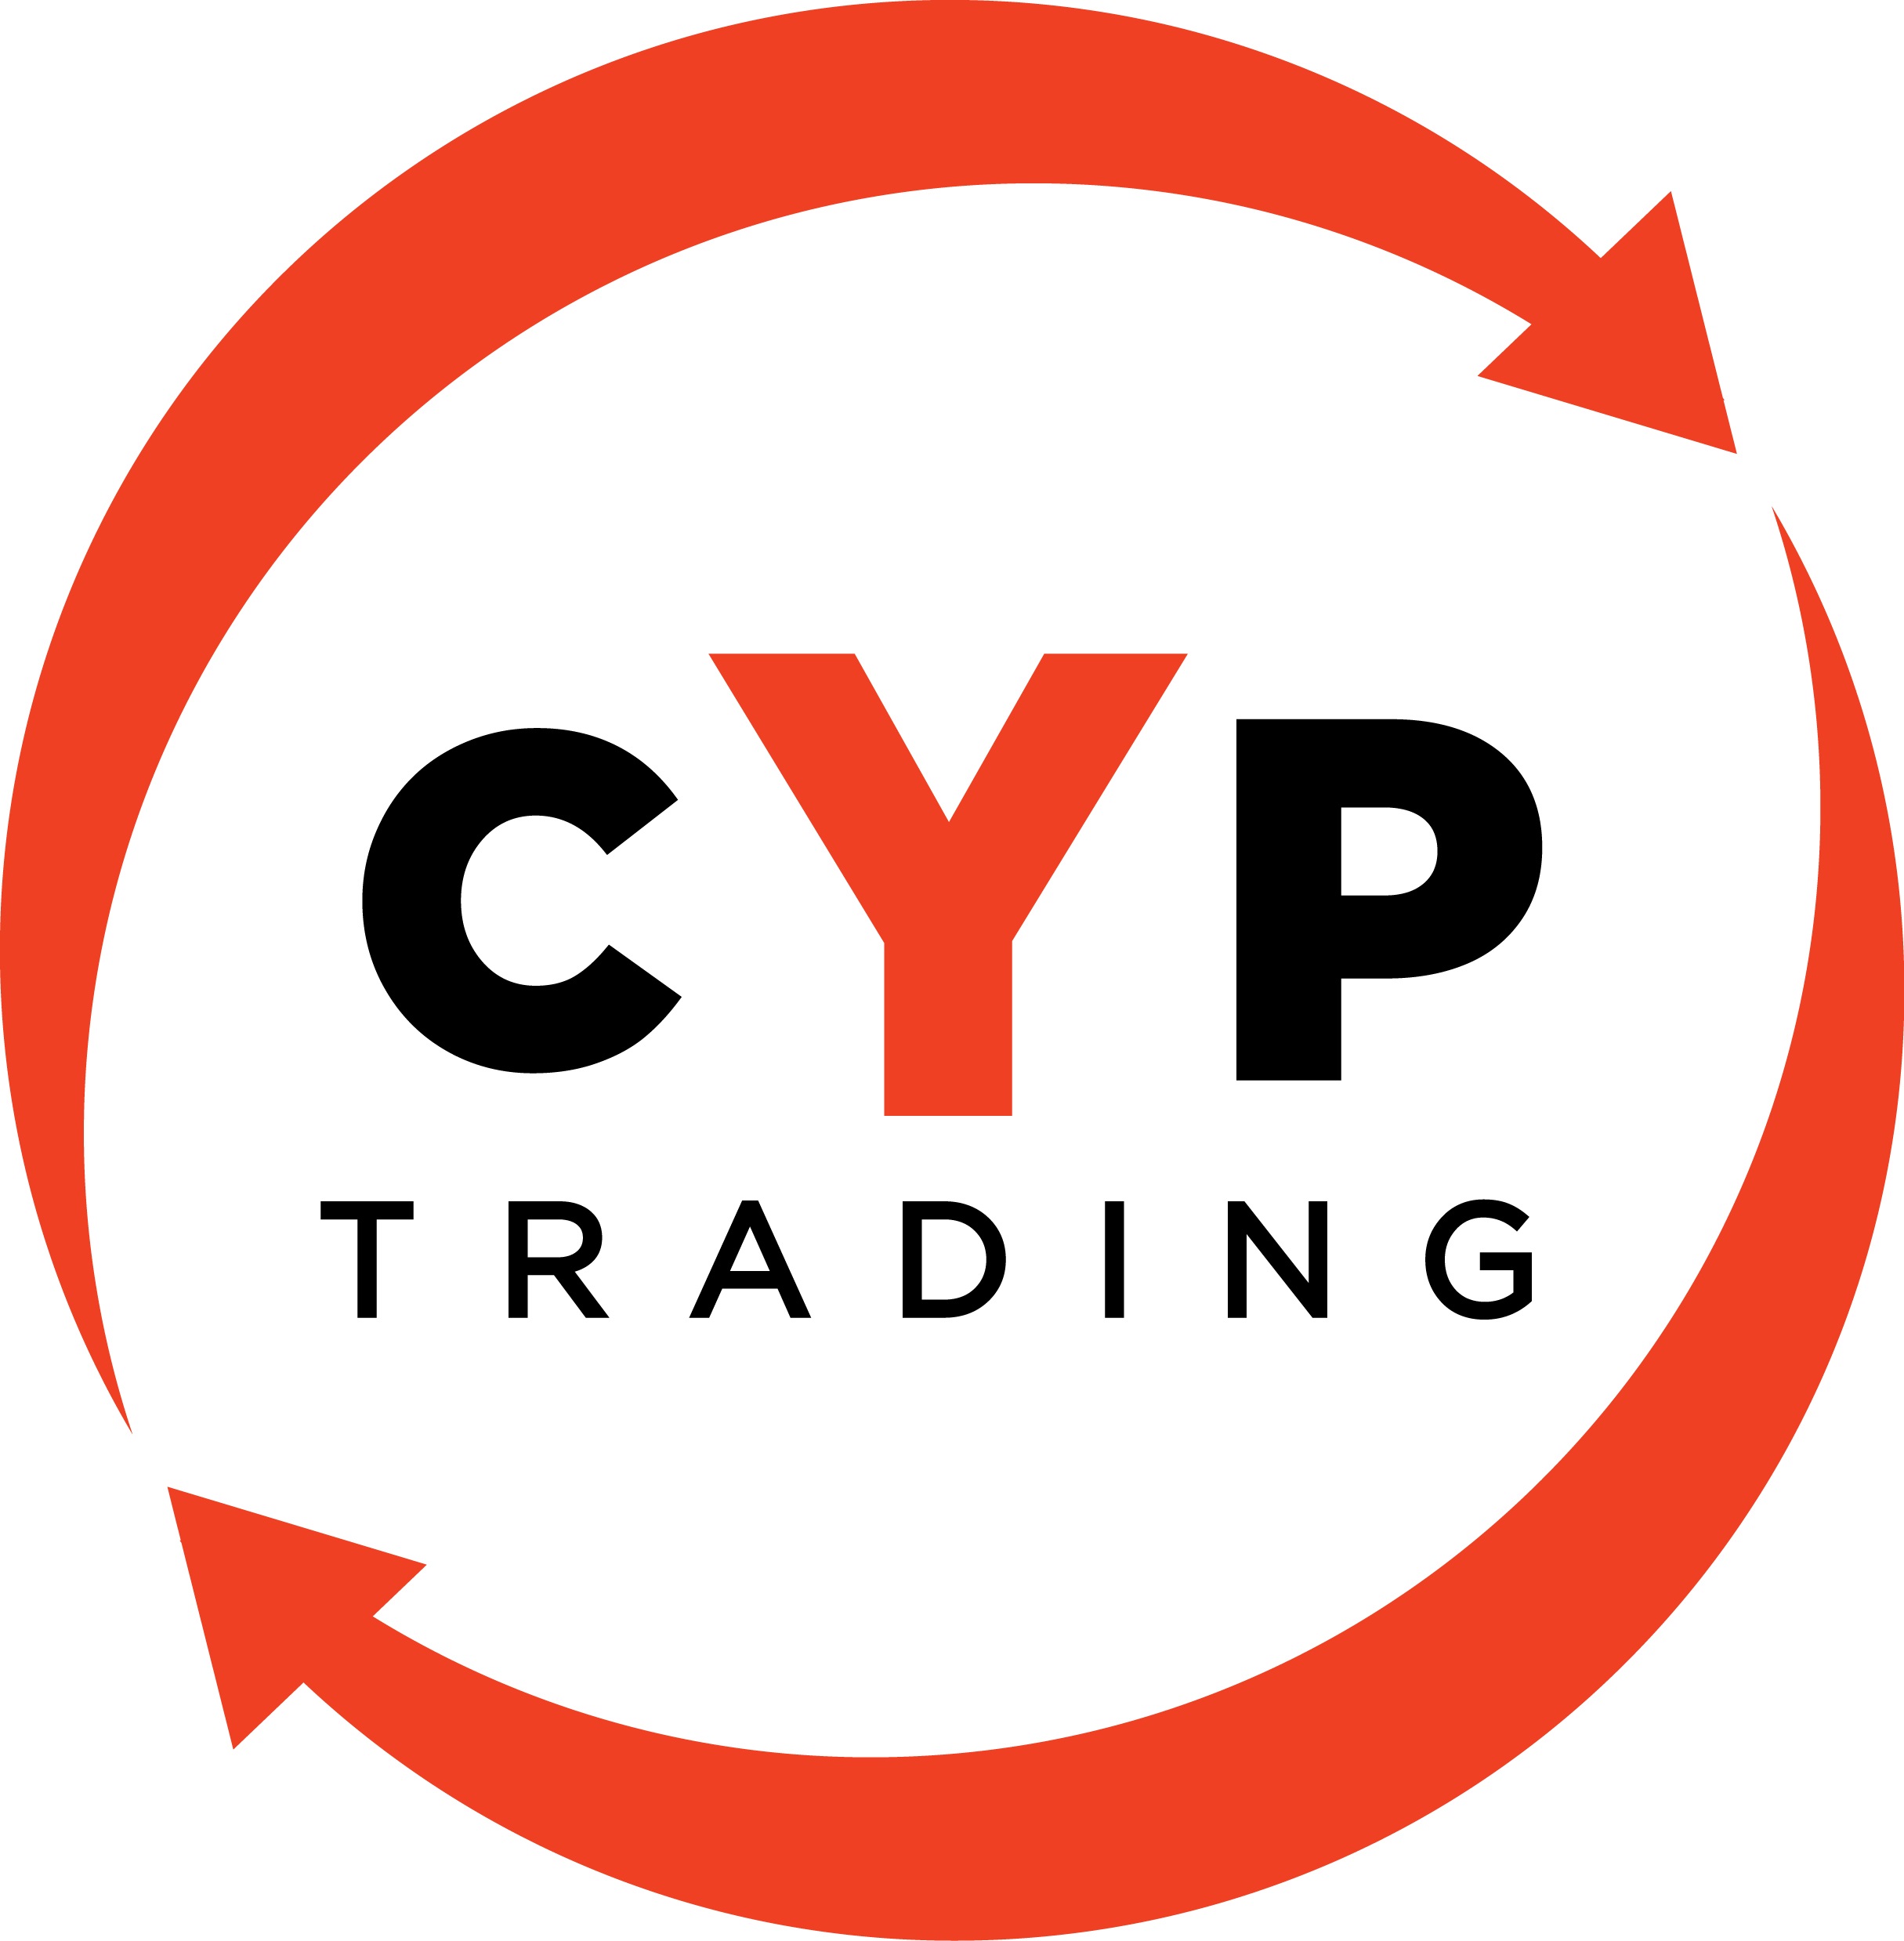 CYp Trading in Pfullingen